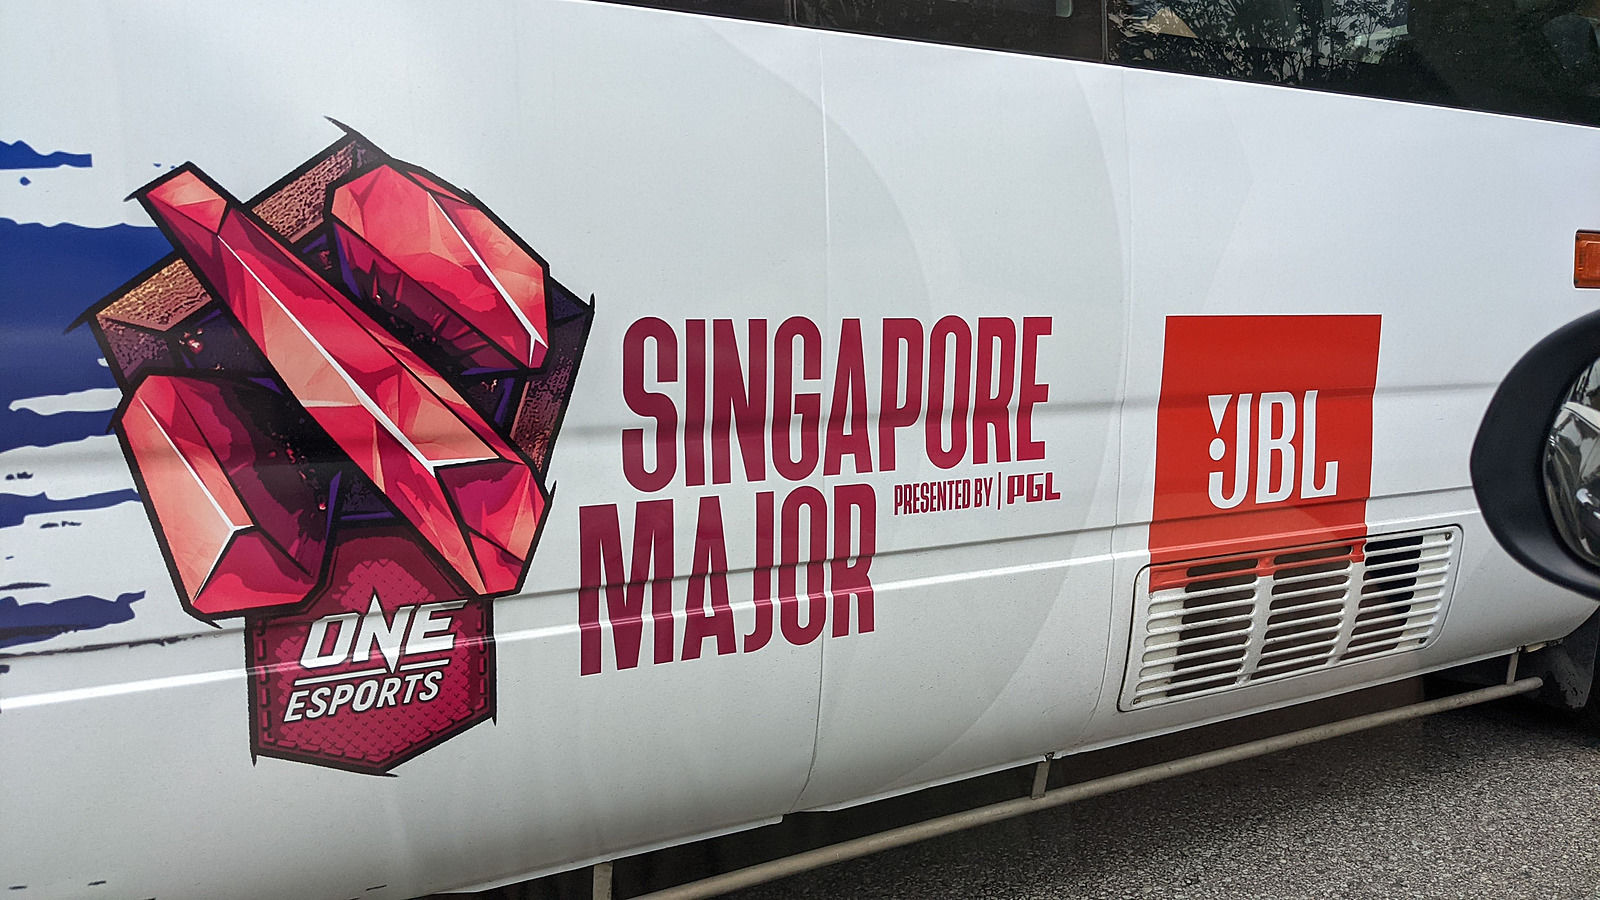 Символика ONE Esports Singapore Major 2021 на автобусе